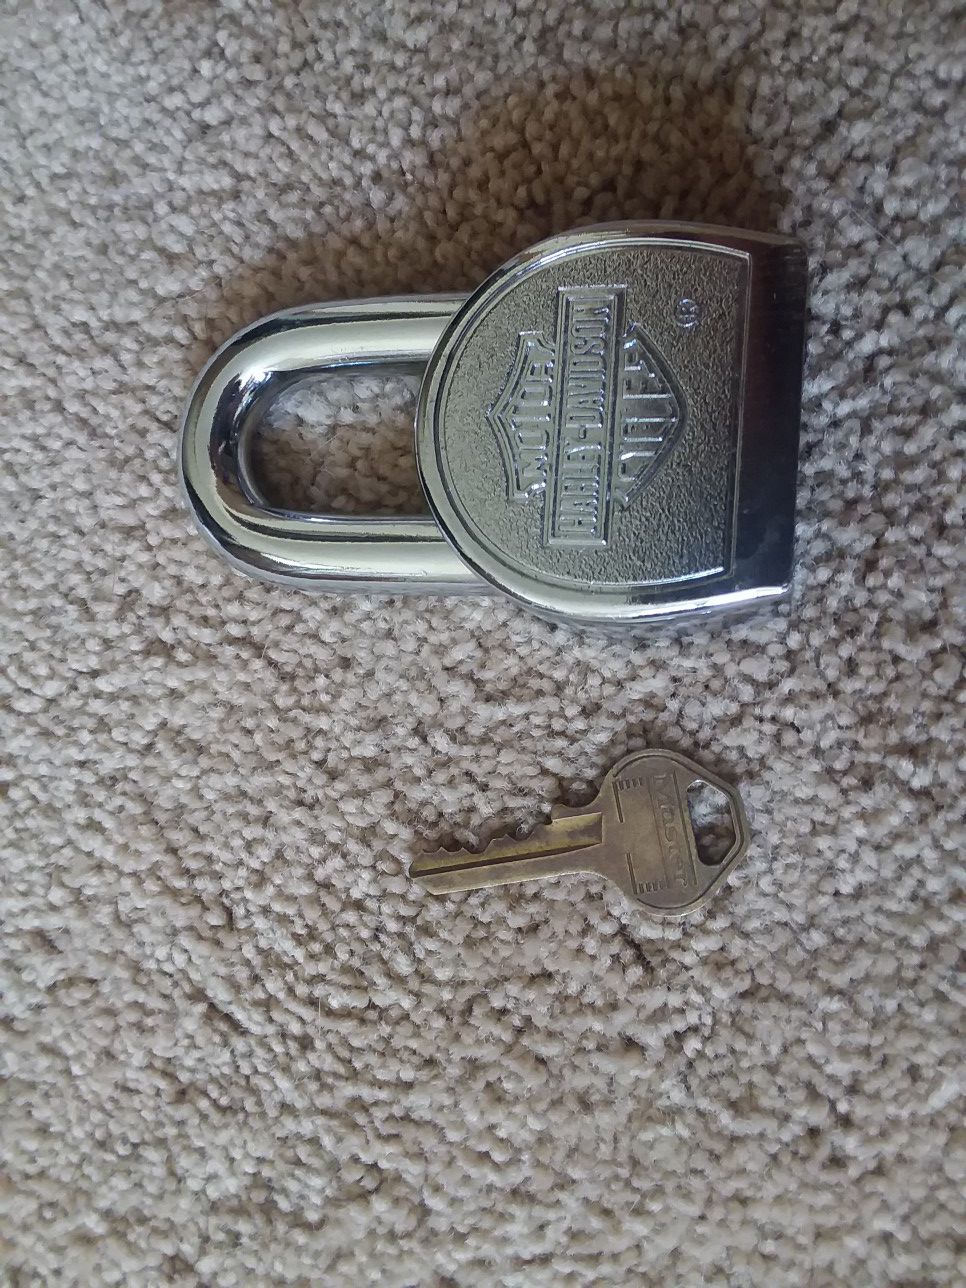 Harley Davidson security lock